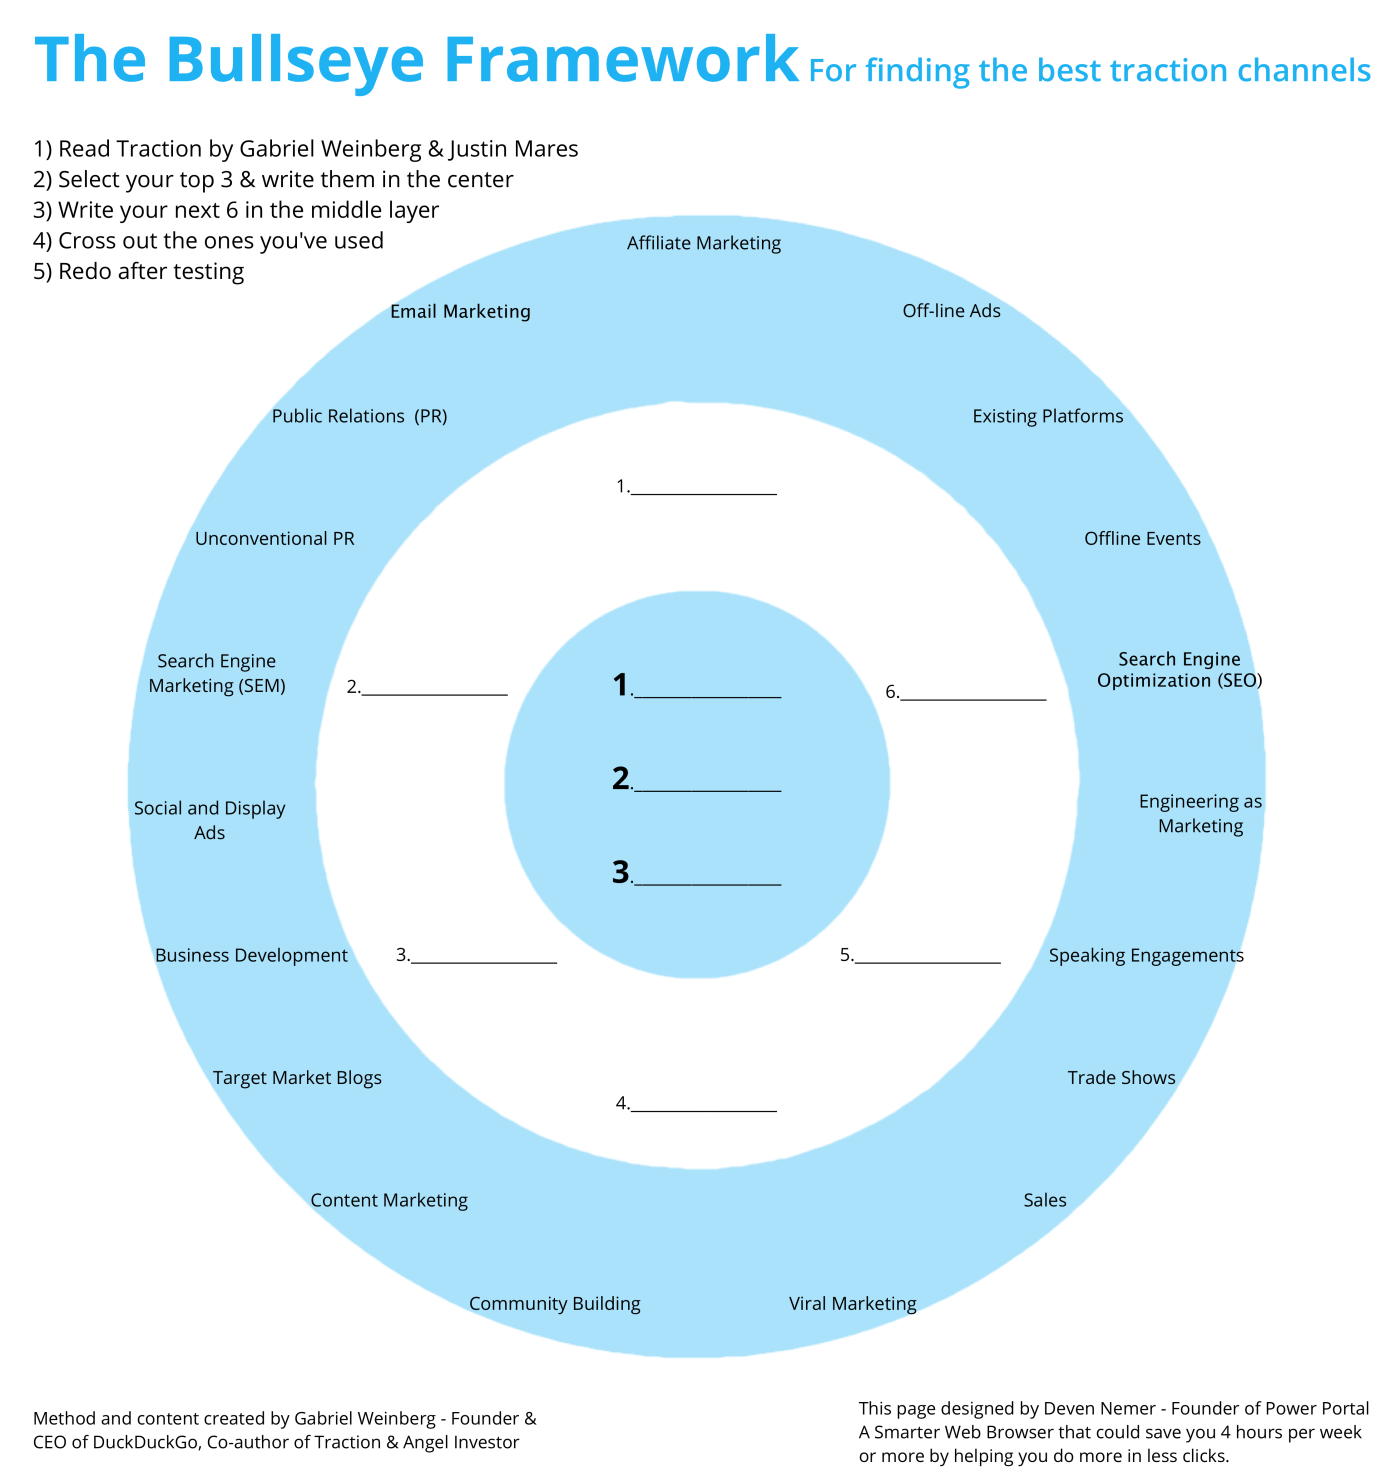 Deven Nemer, founder of Power Portal, offers fellow Traction readers this Bullseye Framework brainstorming sheet.